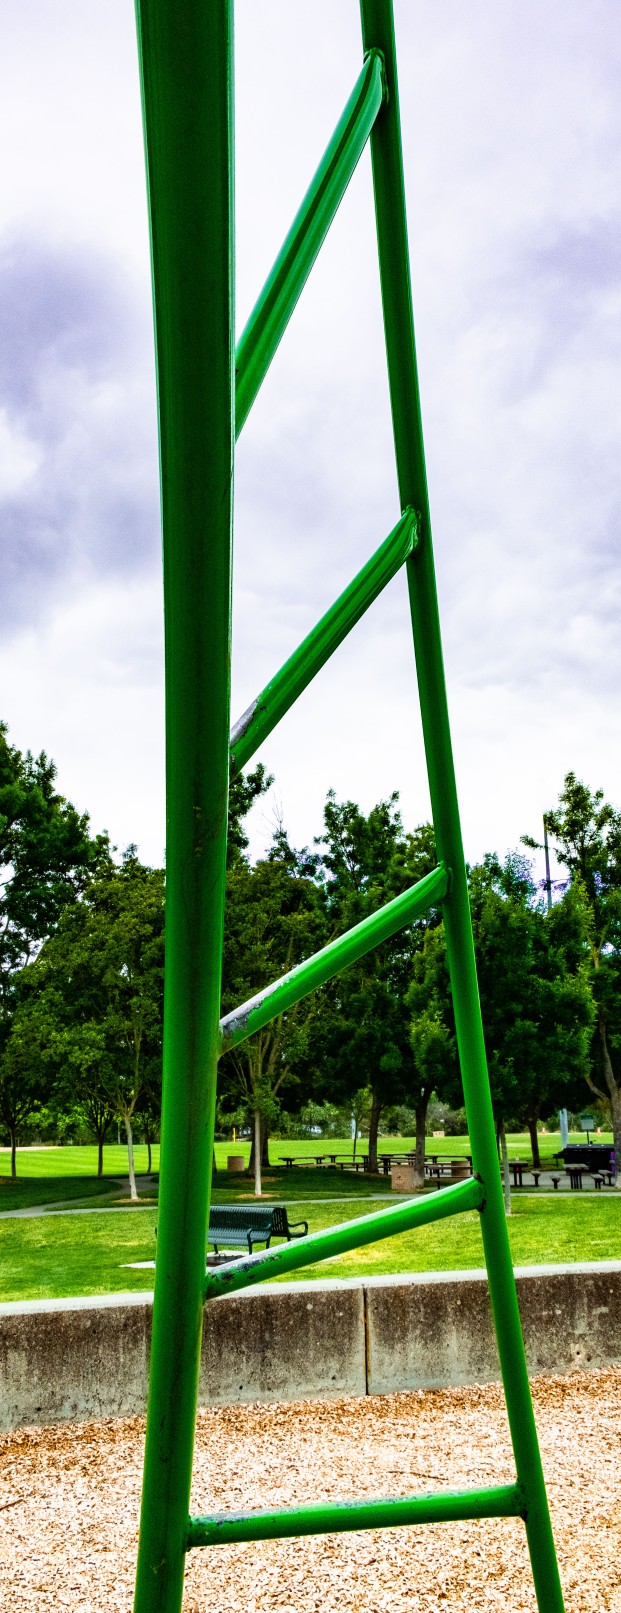 Playground twisted ladder-1621